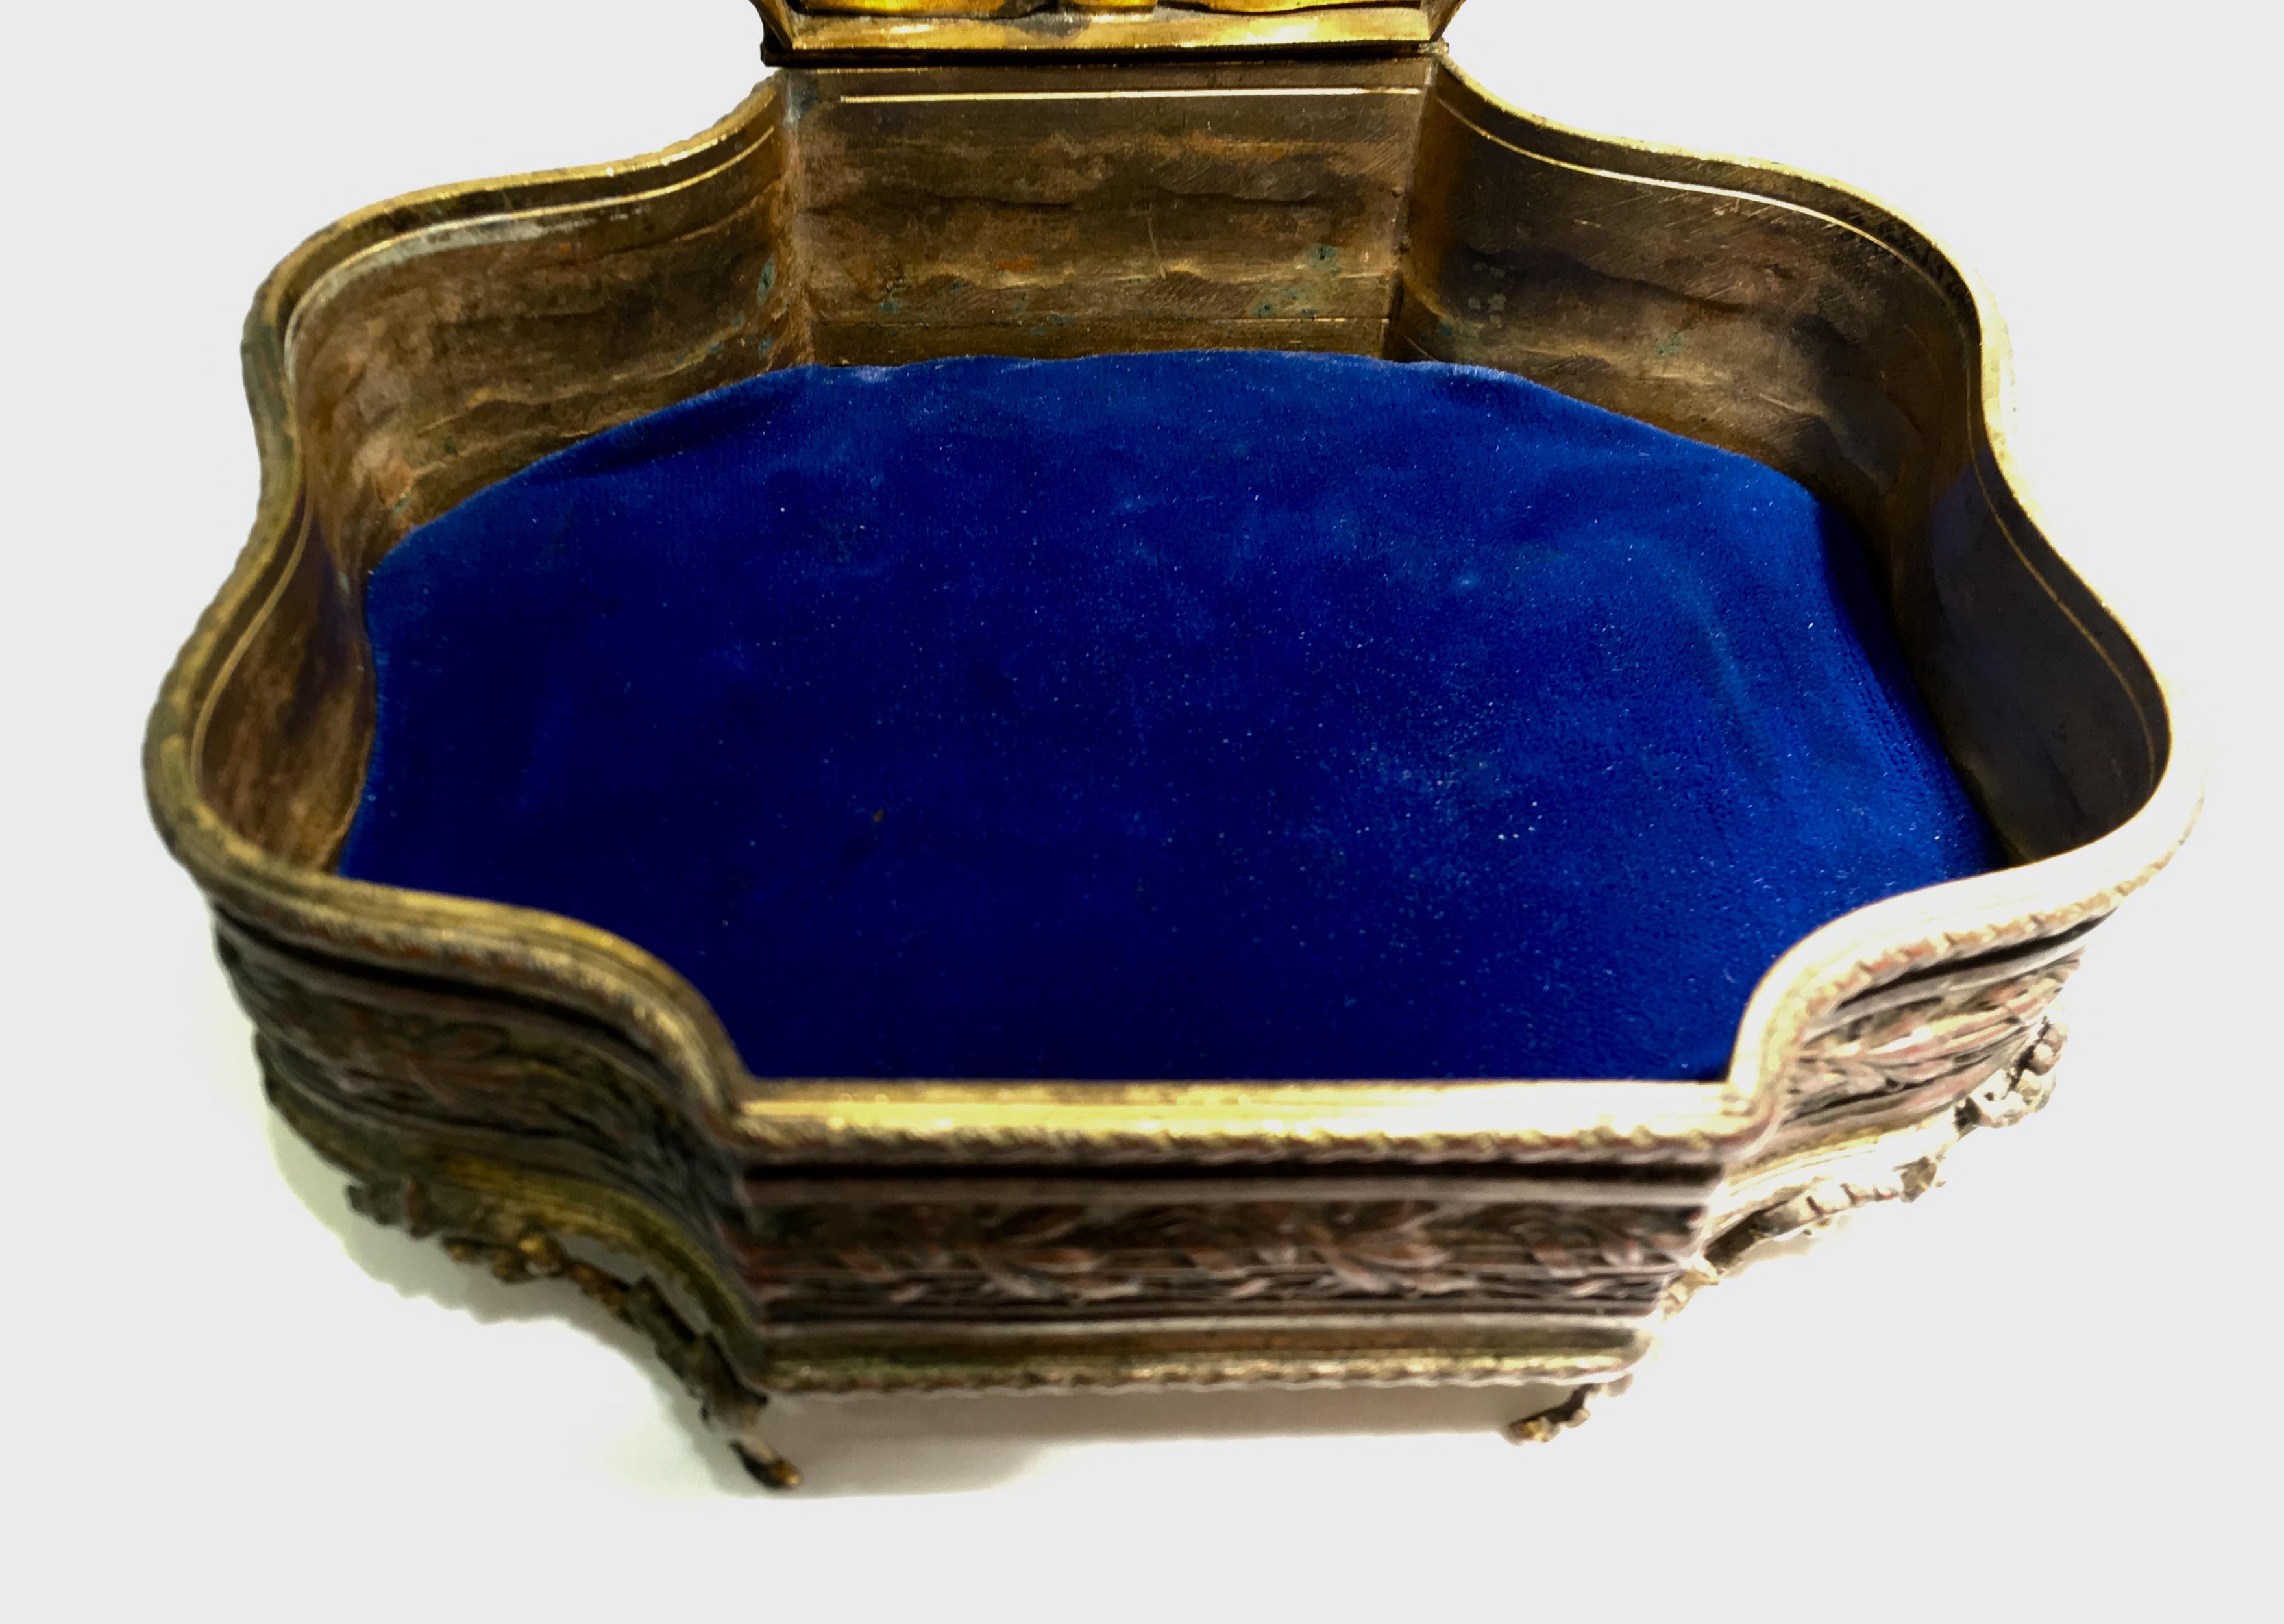  Antique French Metal Trinket Box with Porcelain Sistine Madonna Cherub Plaque For Sale 1